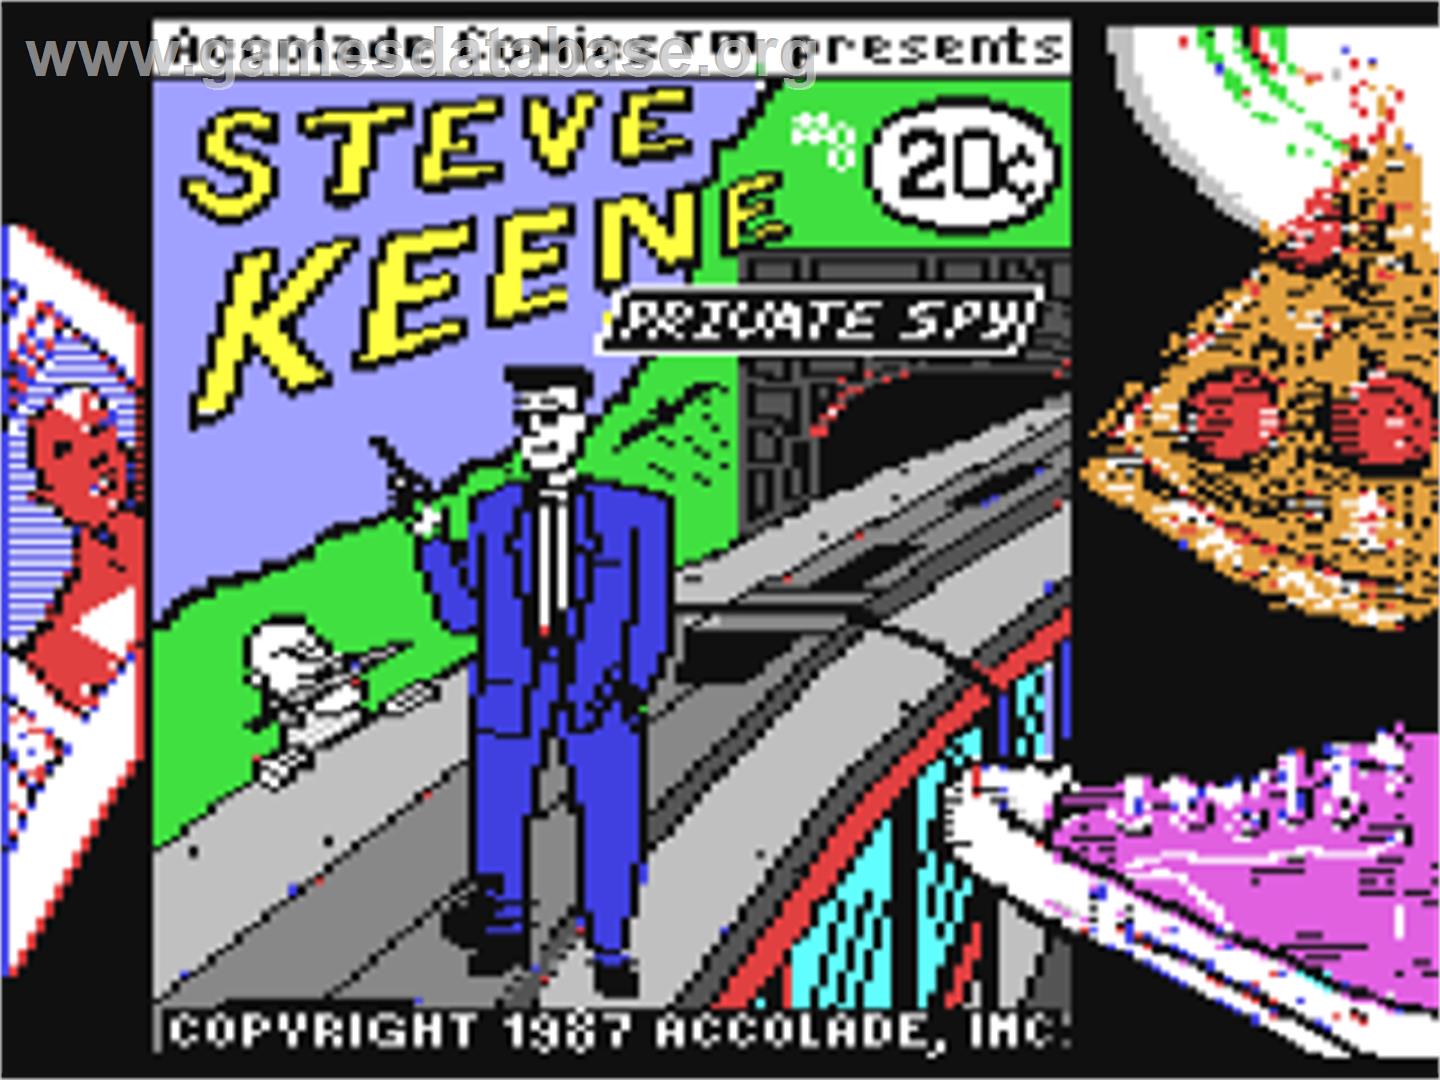 Accolade Comics: Steve Keene, Private Spy - Commodore 64 - Artwork - Title Screen